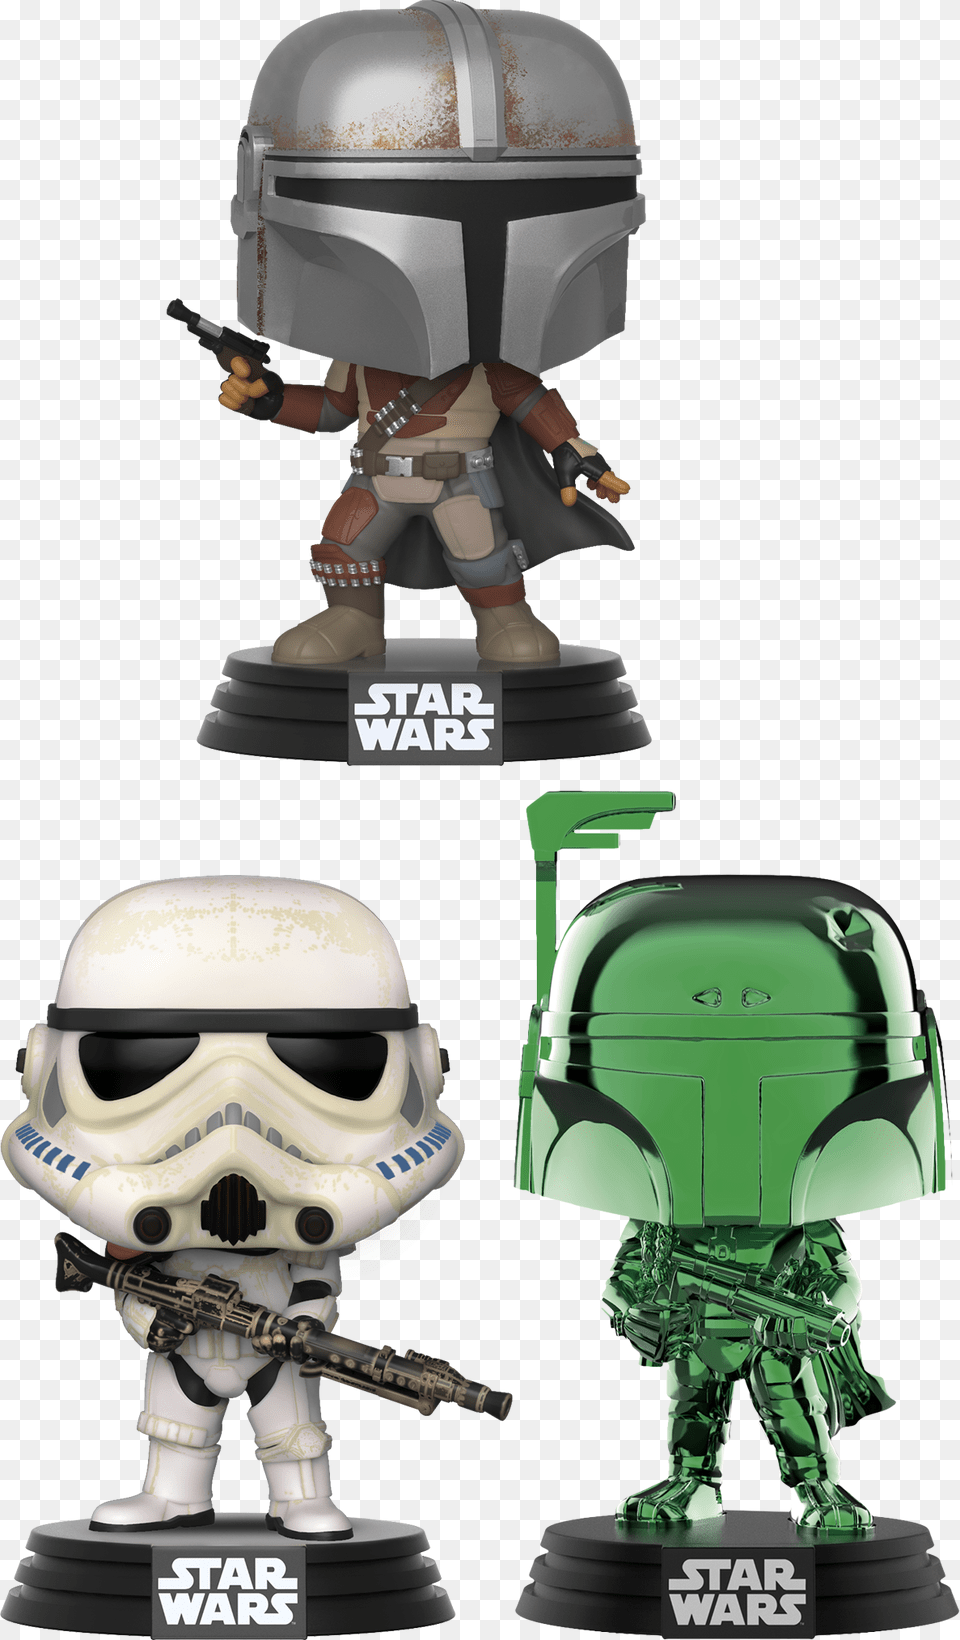 Star Wars Funko Pop Star Wars 2019, Helmet, Baby, Person, Gun Png Image